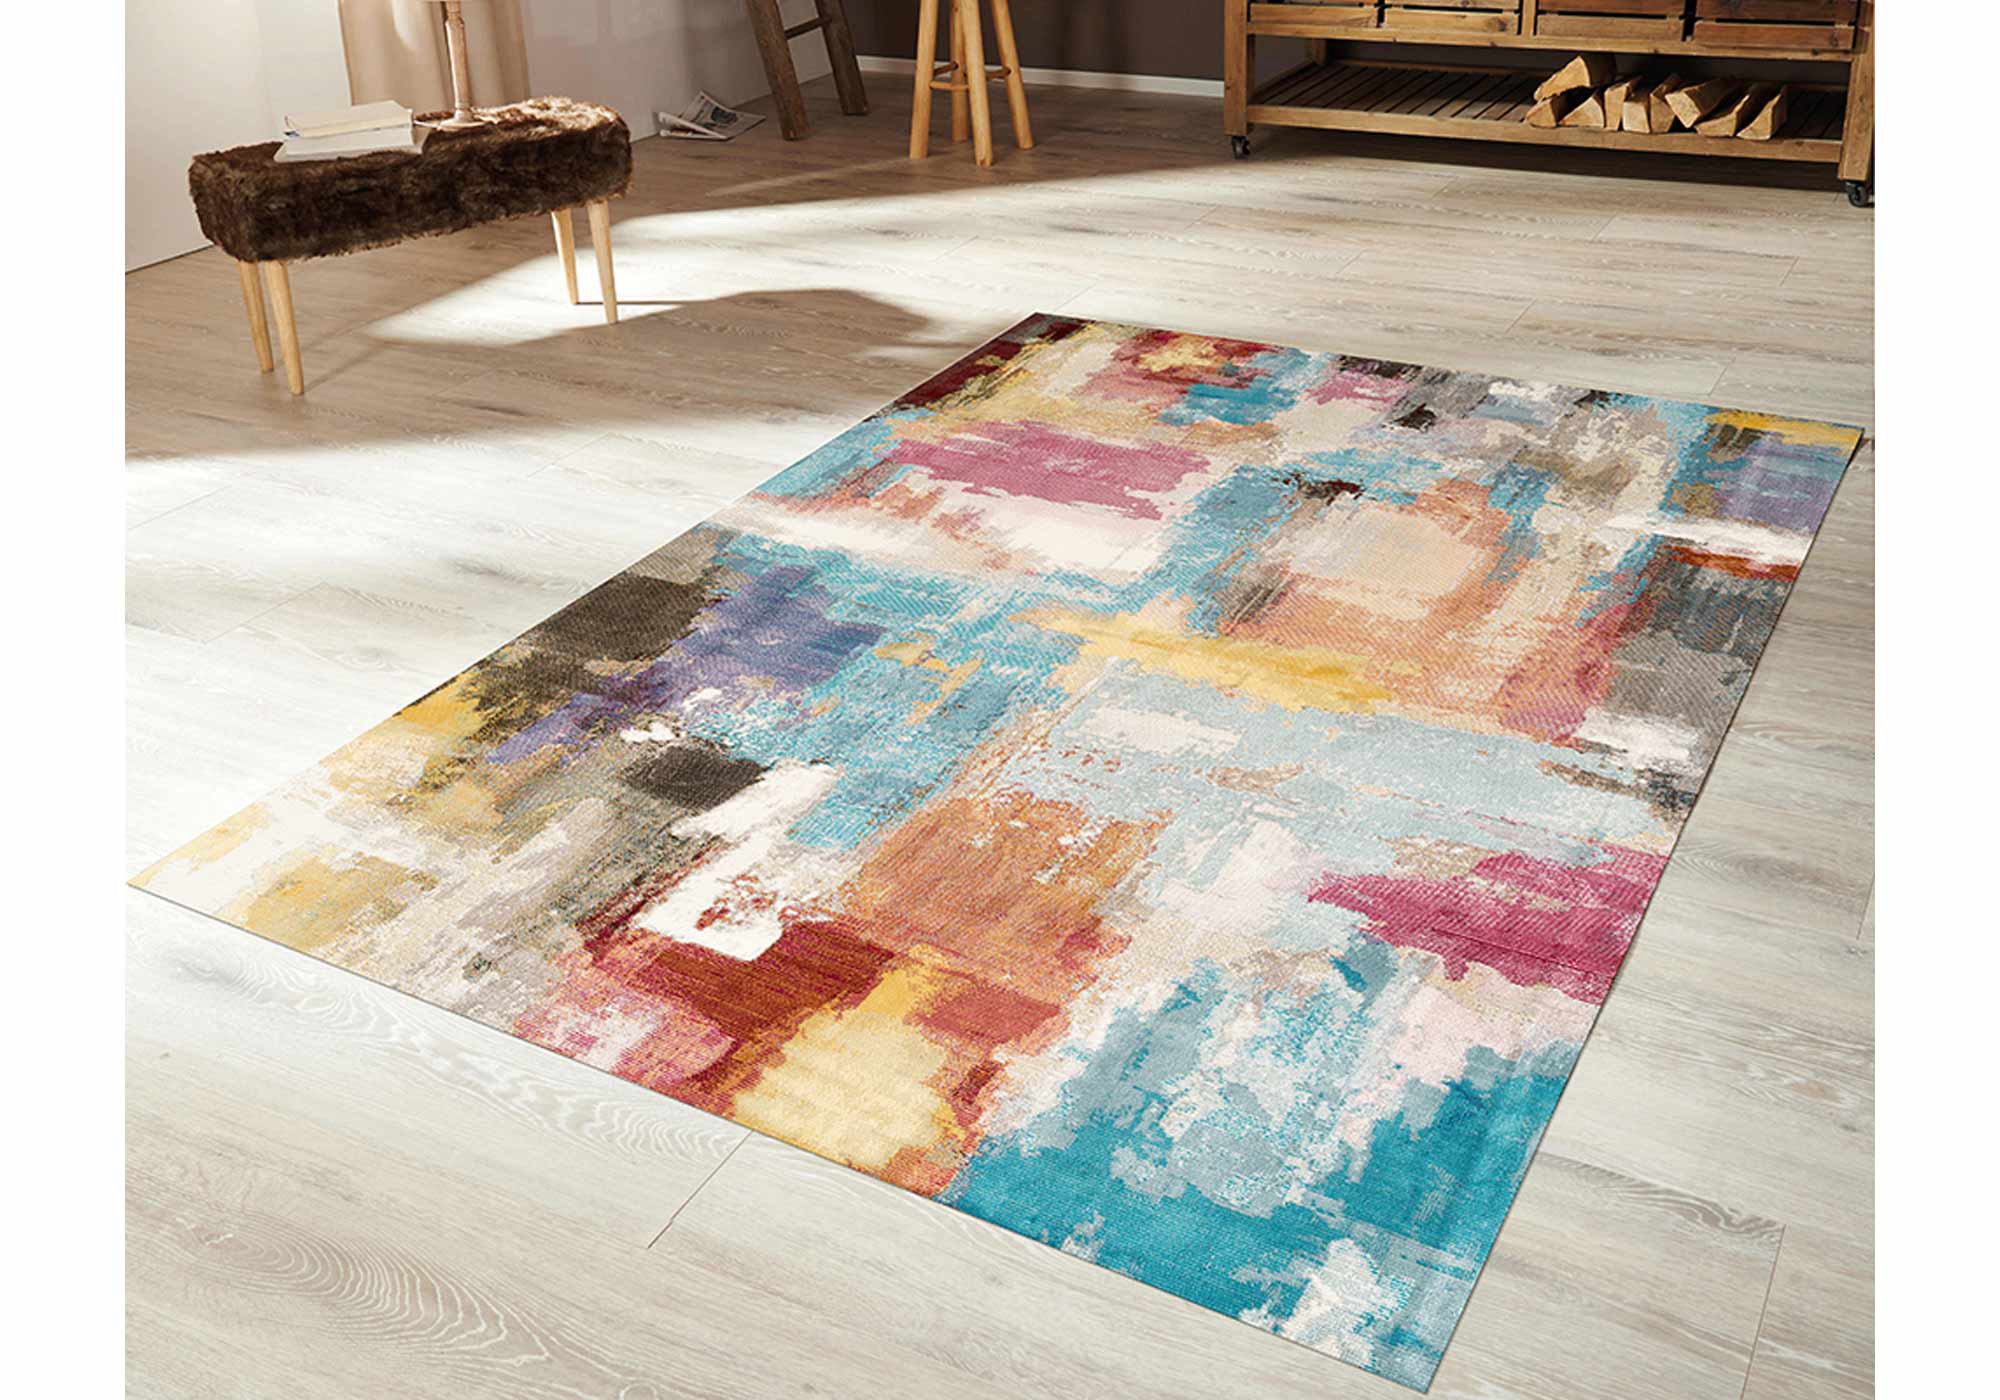 Festival Teppich 160 x 230 cm - mehrfarbig - 6 mm Höhe - Picasso 598